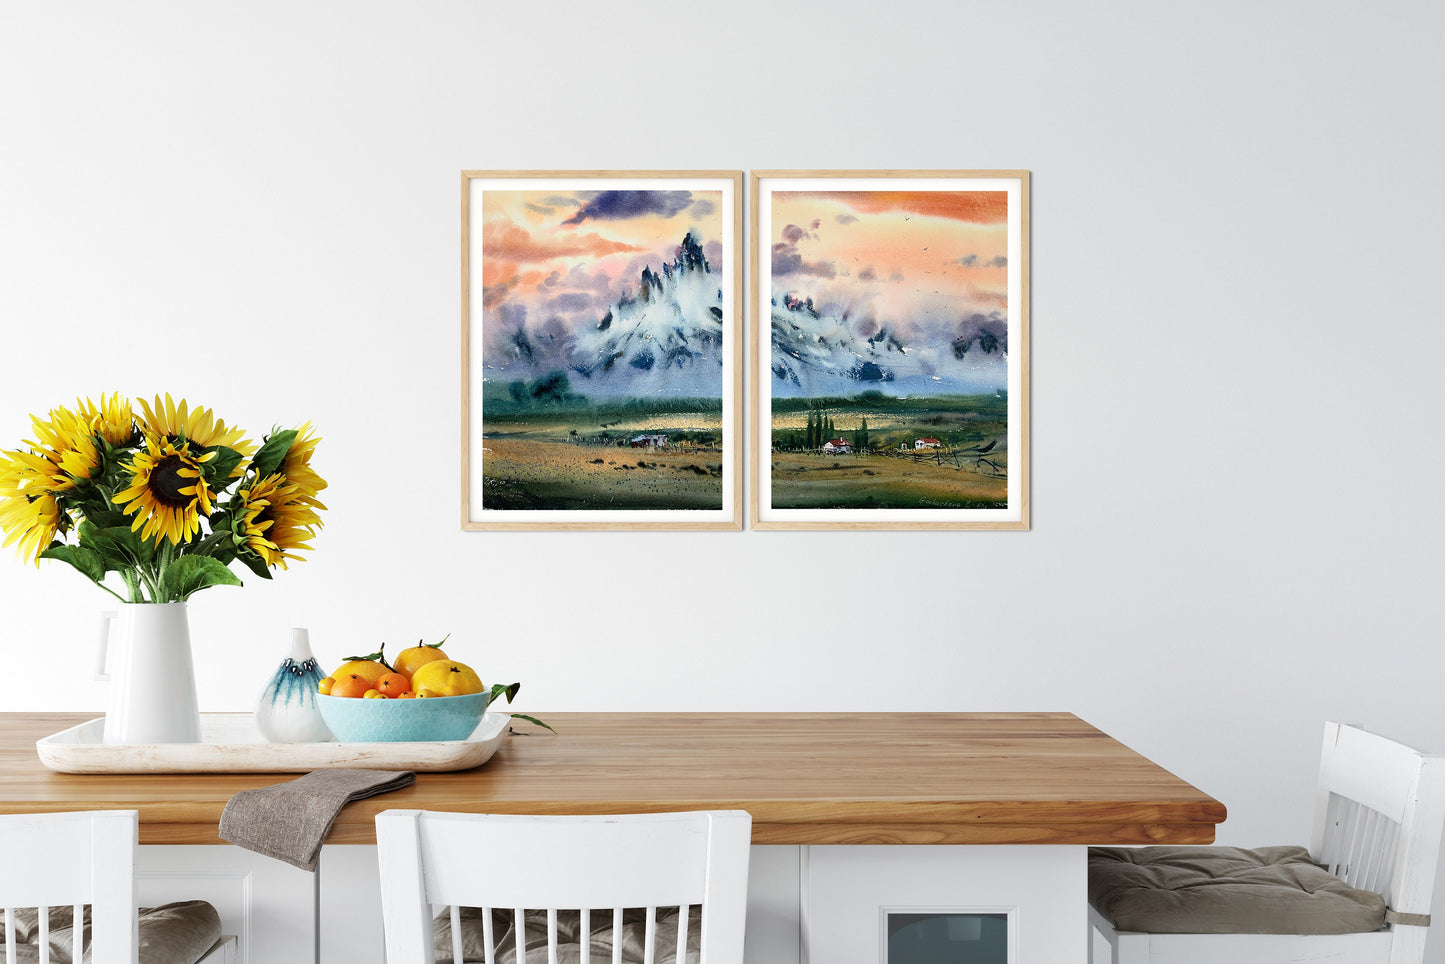 Landscape Print Set of 2 Prints, Nature Wall Art Decor, Mountain Scenery Painting, Split Extra Large Print, Orange Green